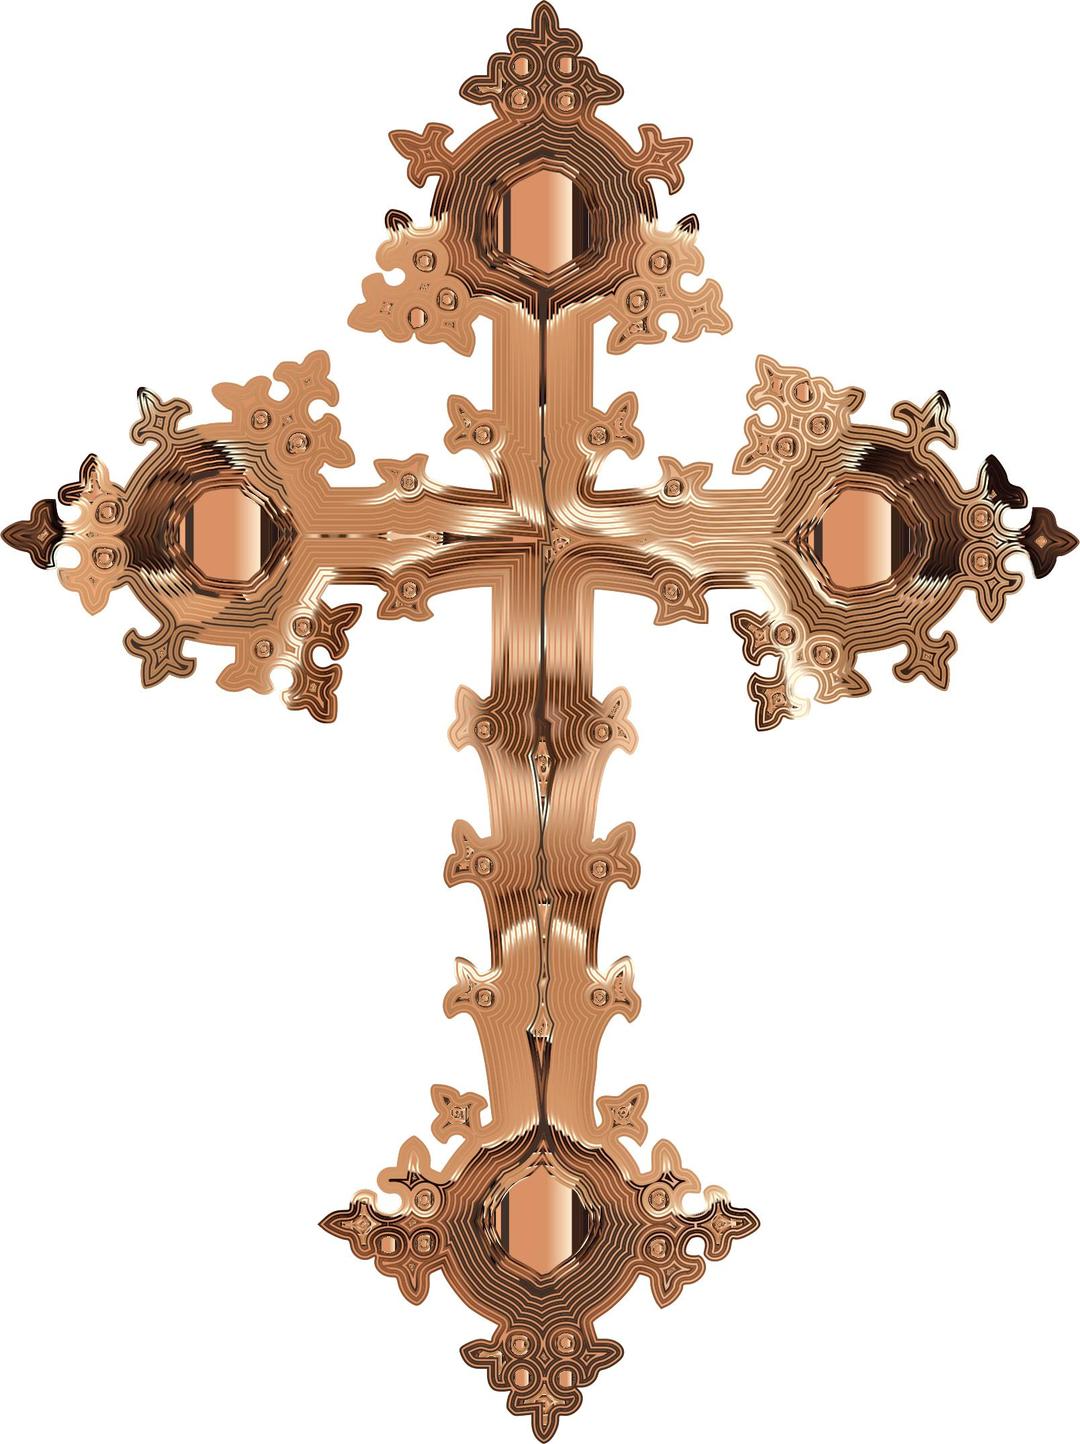 Polished Copper Ornate Cross No Background png transparent